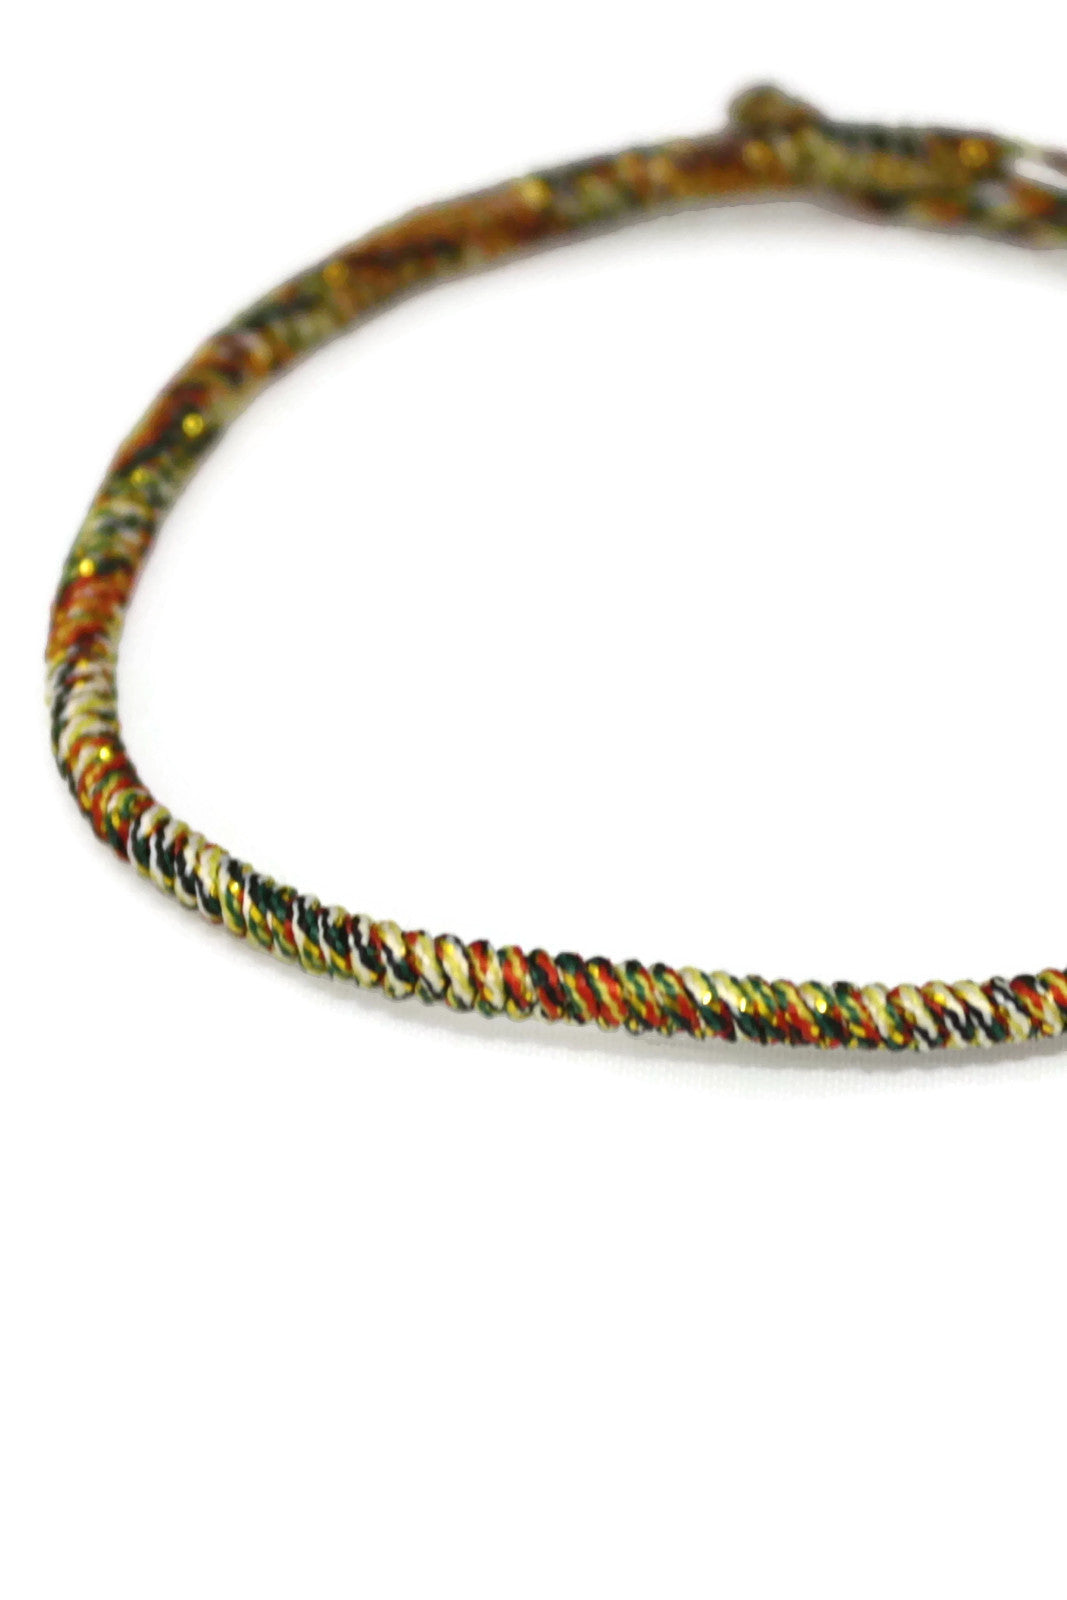 Twist Multi Color Braided Cord Essential Oil Bracelet- Adjustable-Diffuser Bracelet-Destination Oils